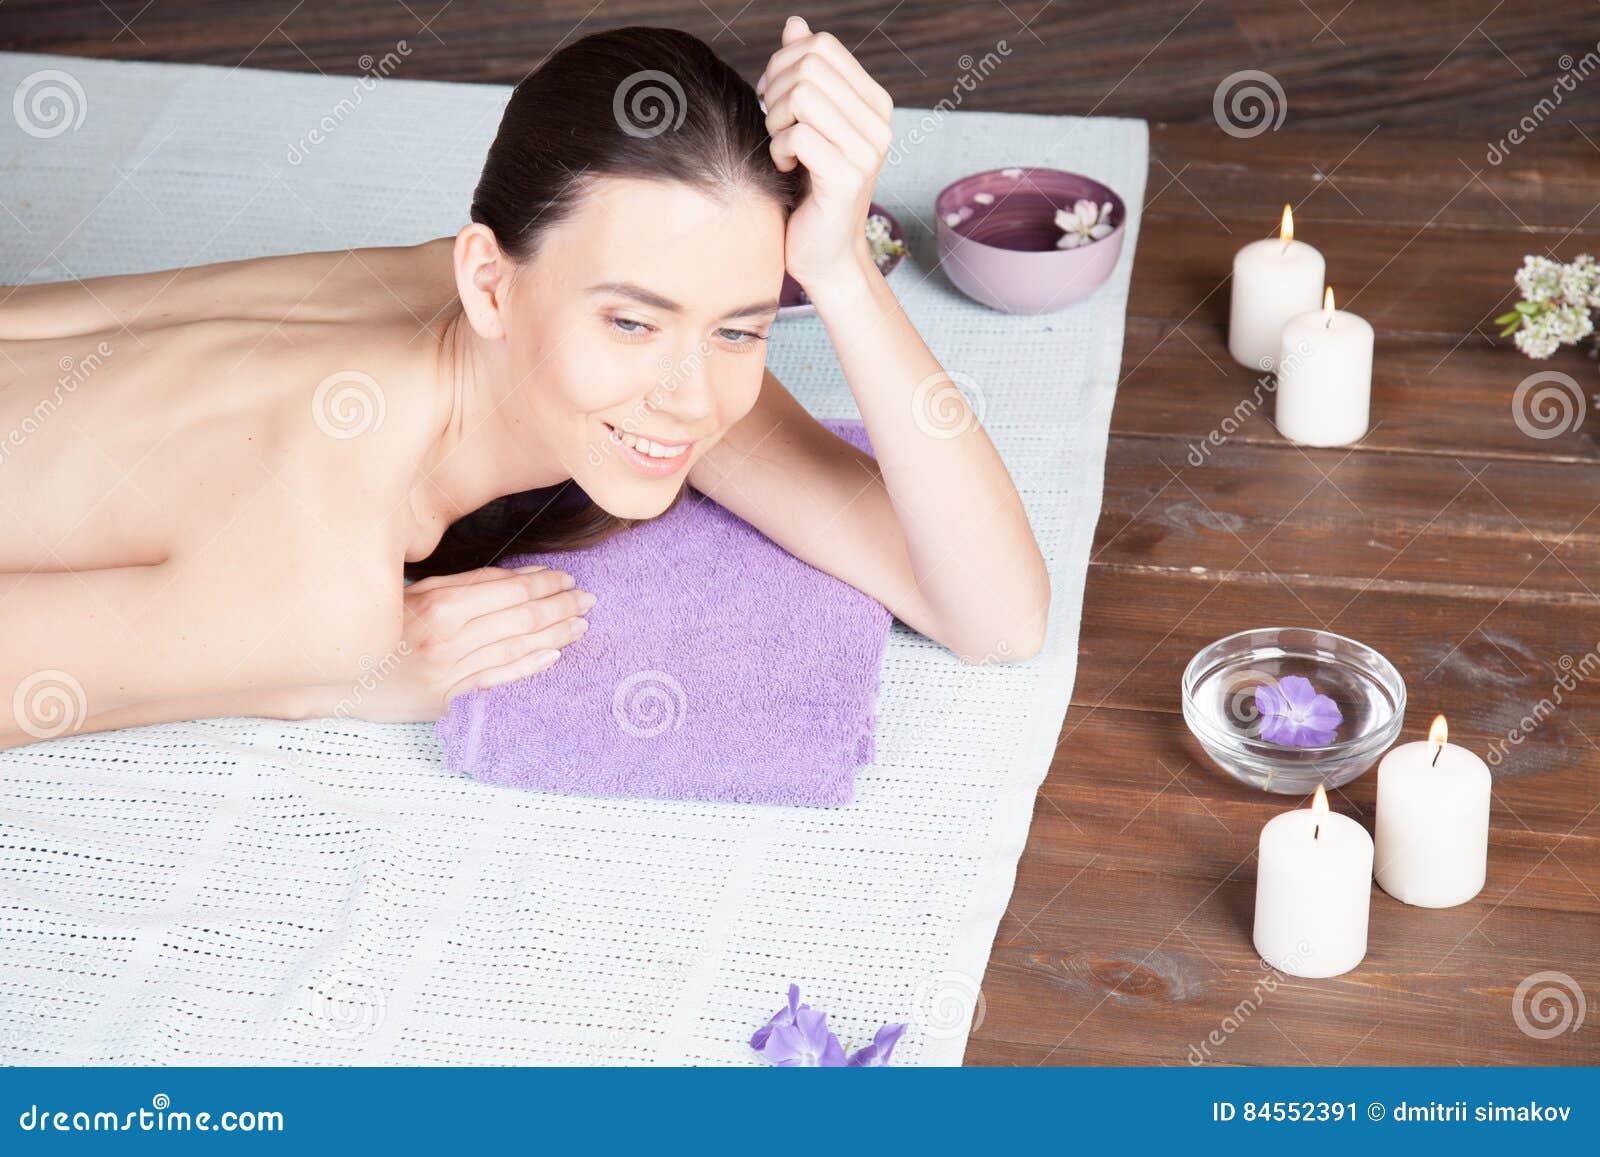 Girl Spa Massage Sauna Relaxation Bath Stock Image Image Of Female Candle 84552391